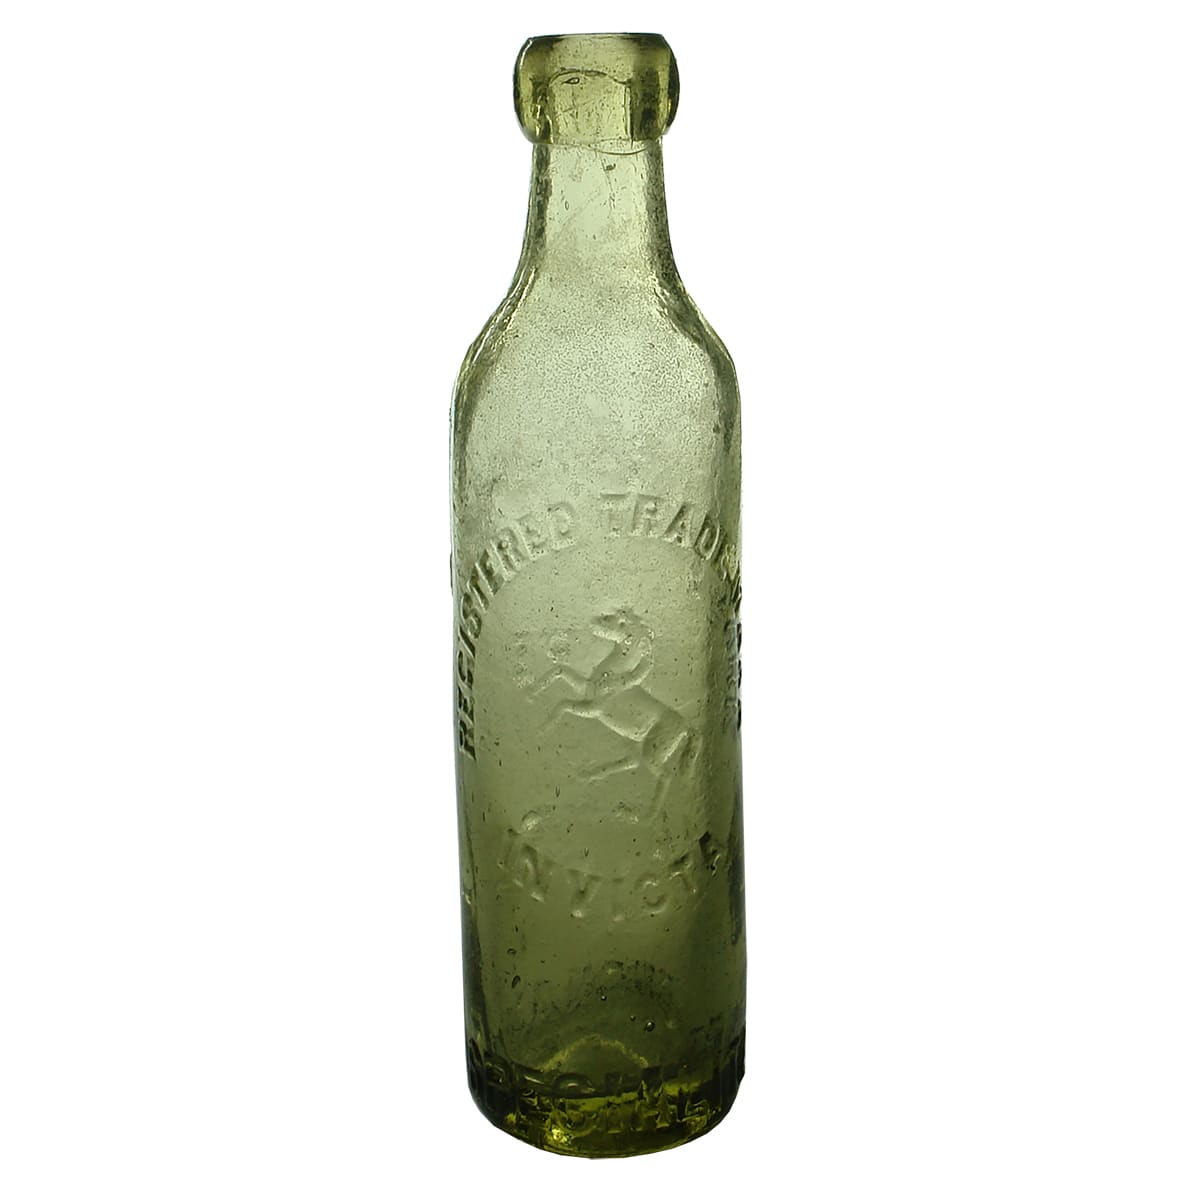 Tall Blob Top. Culverhouse Natural Lemonade. Lime Green. 10 oz.